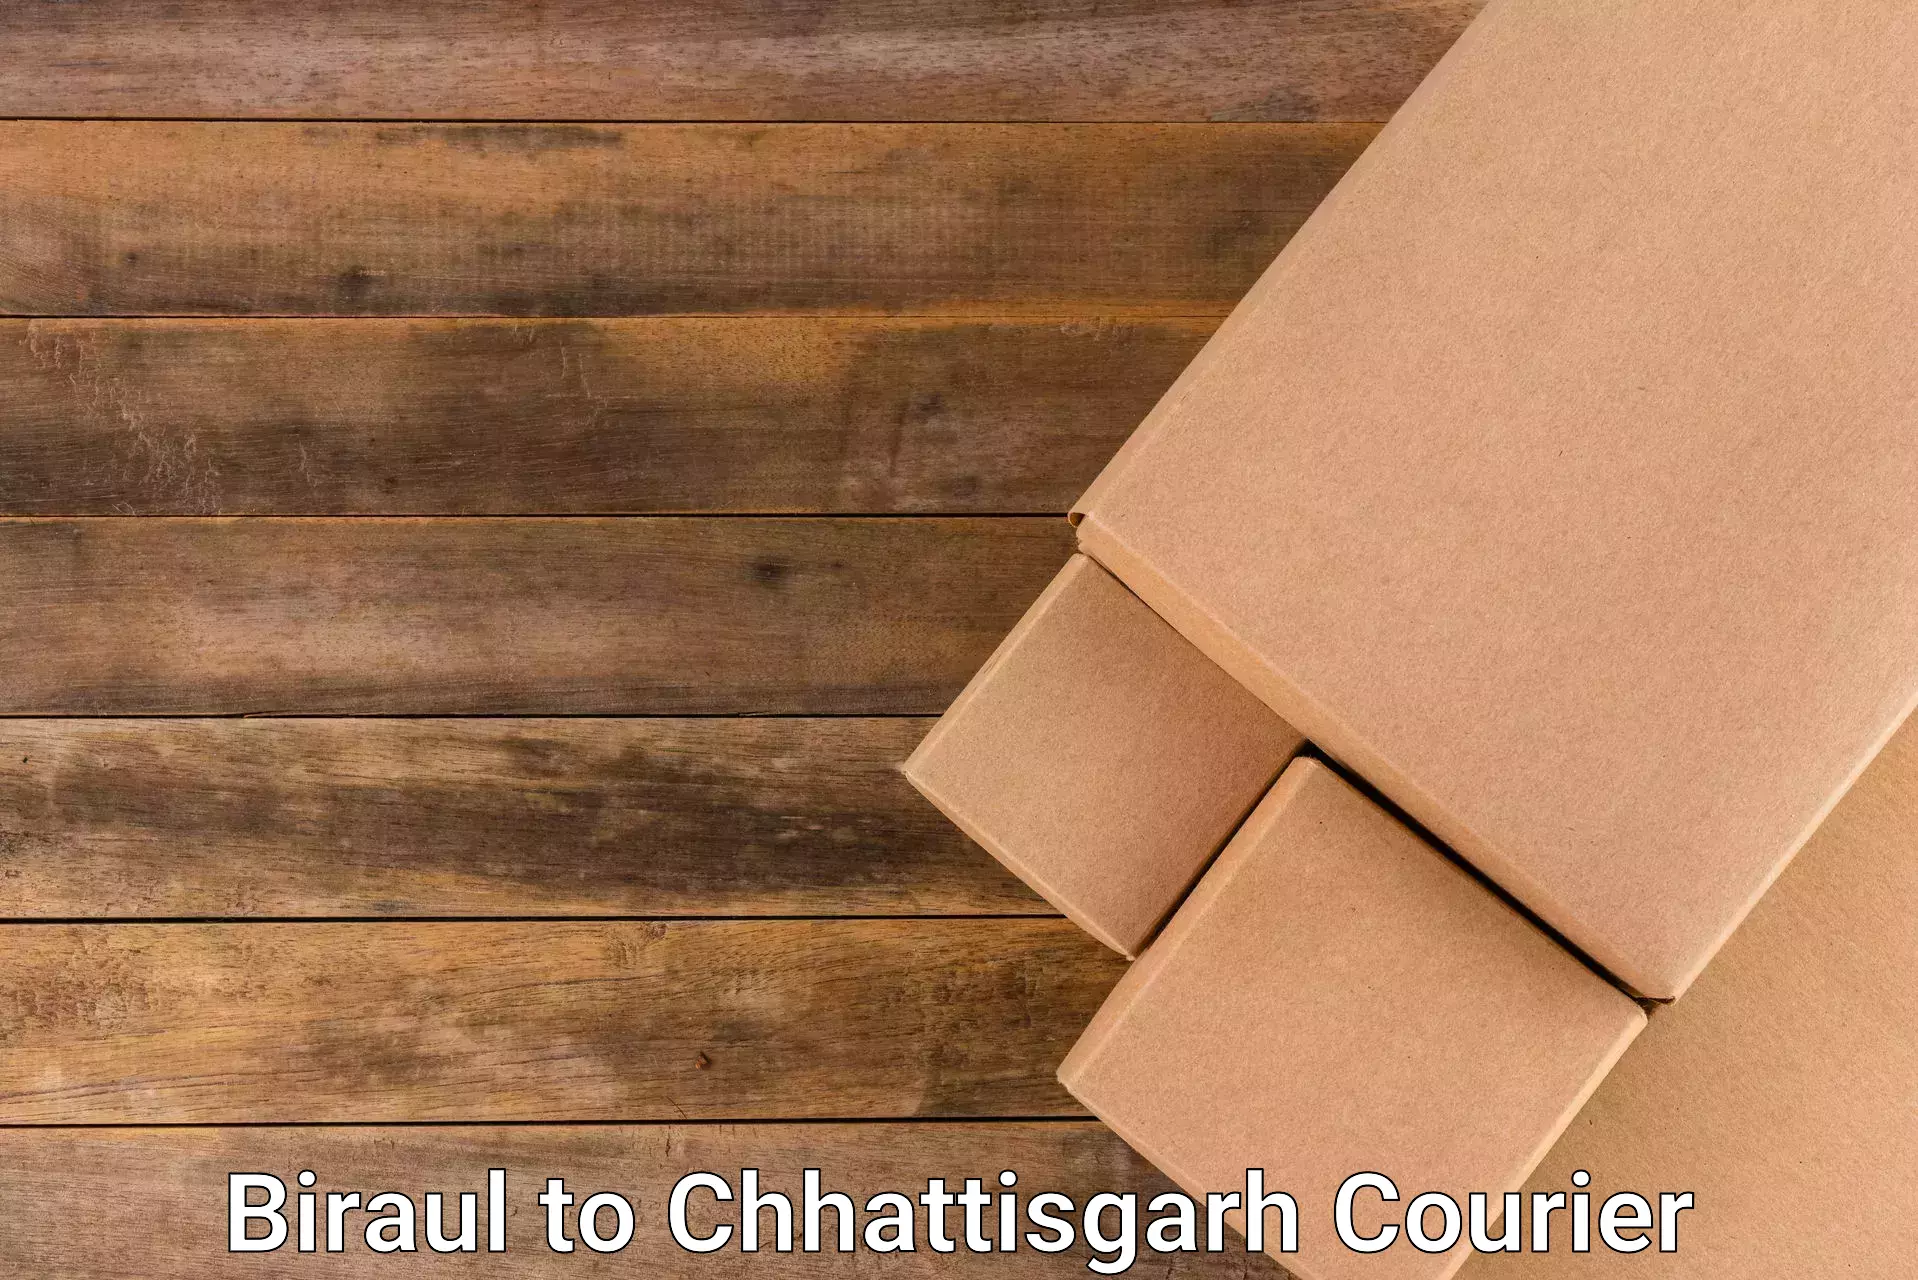 24-hour courier service Biraul to Korea Chhattisgarh